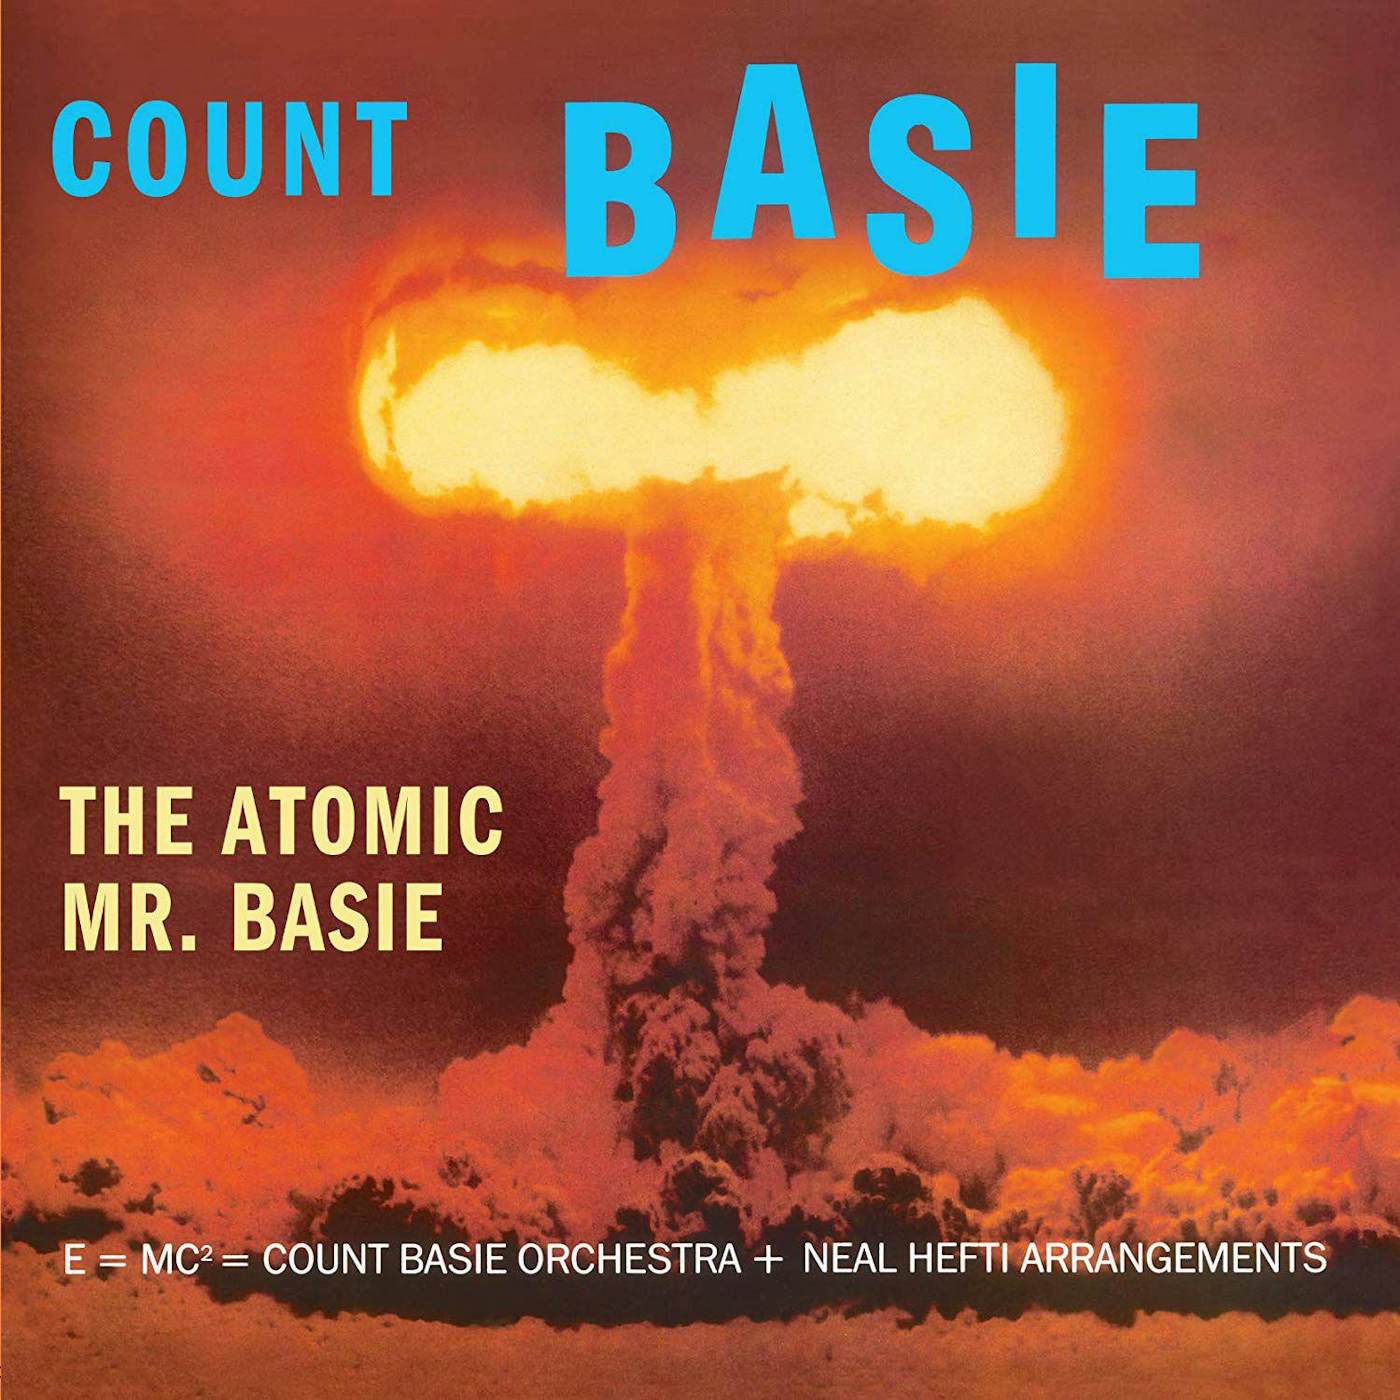 Count Basie ATOMIC MR BASIE Vinyl Record - Colored Vinyl, 180 Gram Pressing, Orange Vinyl, Spain Release